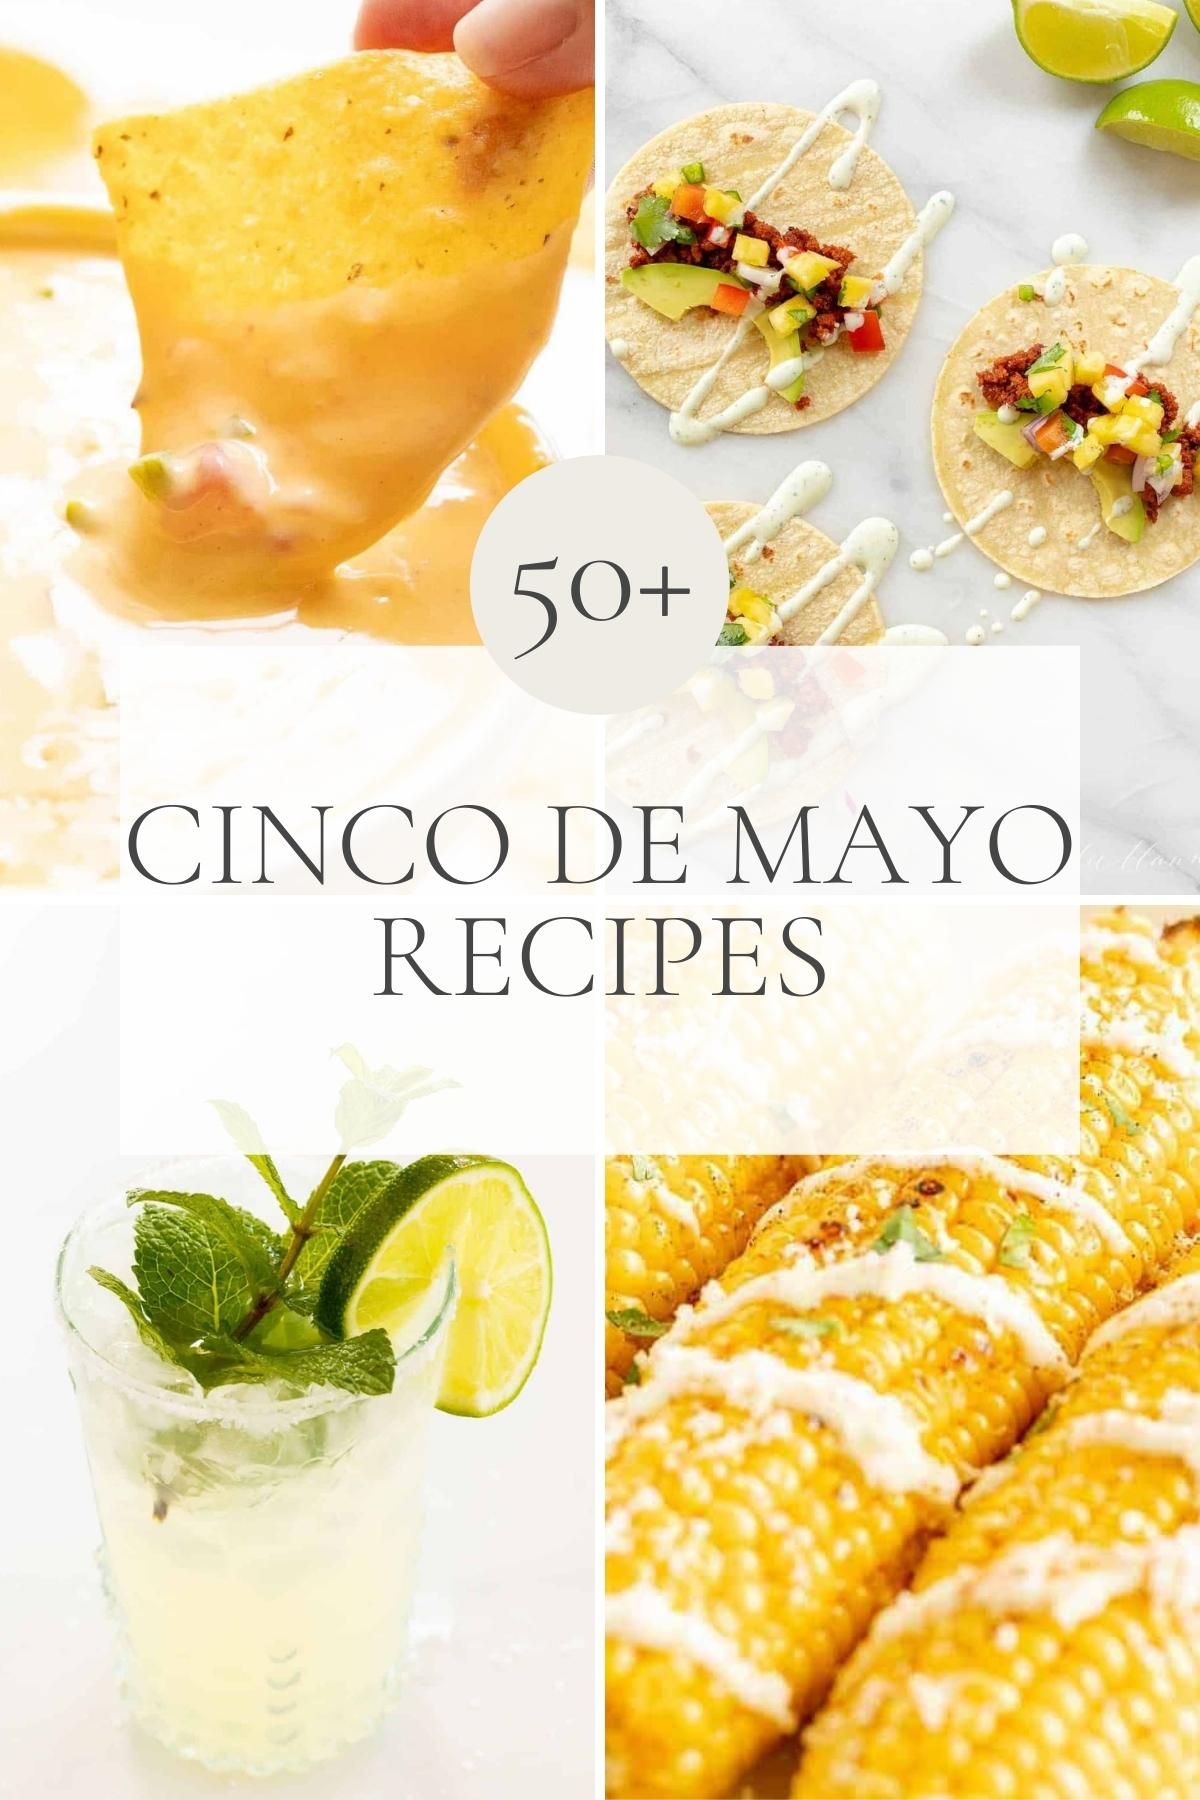 A graphic with images and text describing a Cinco de Mayo menu